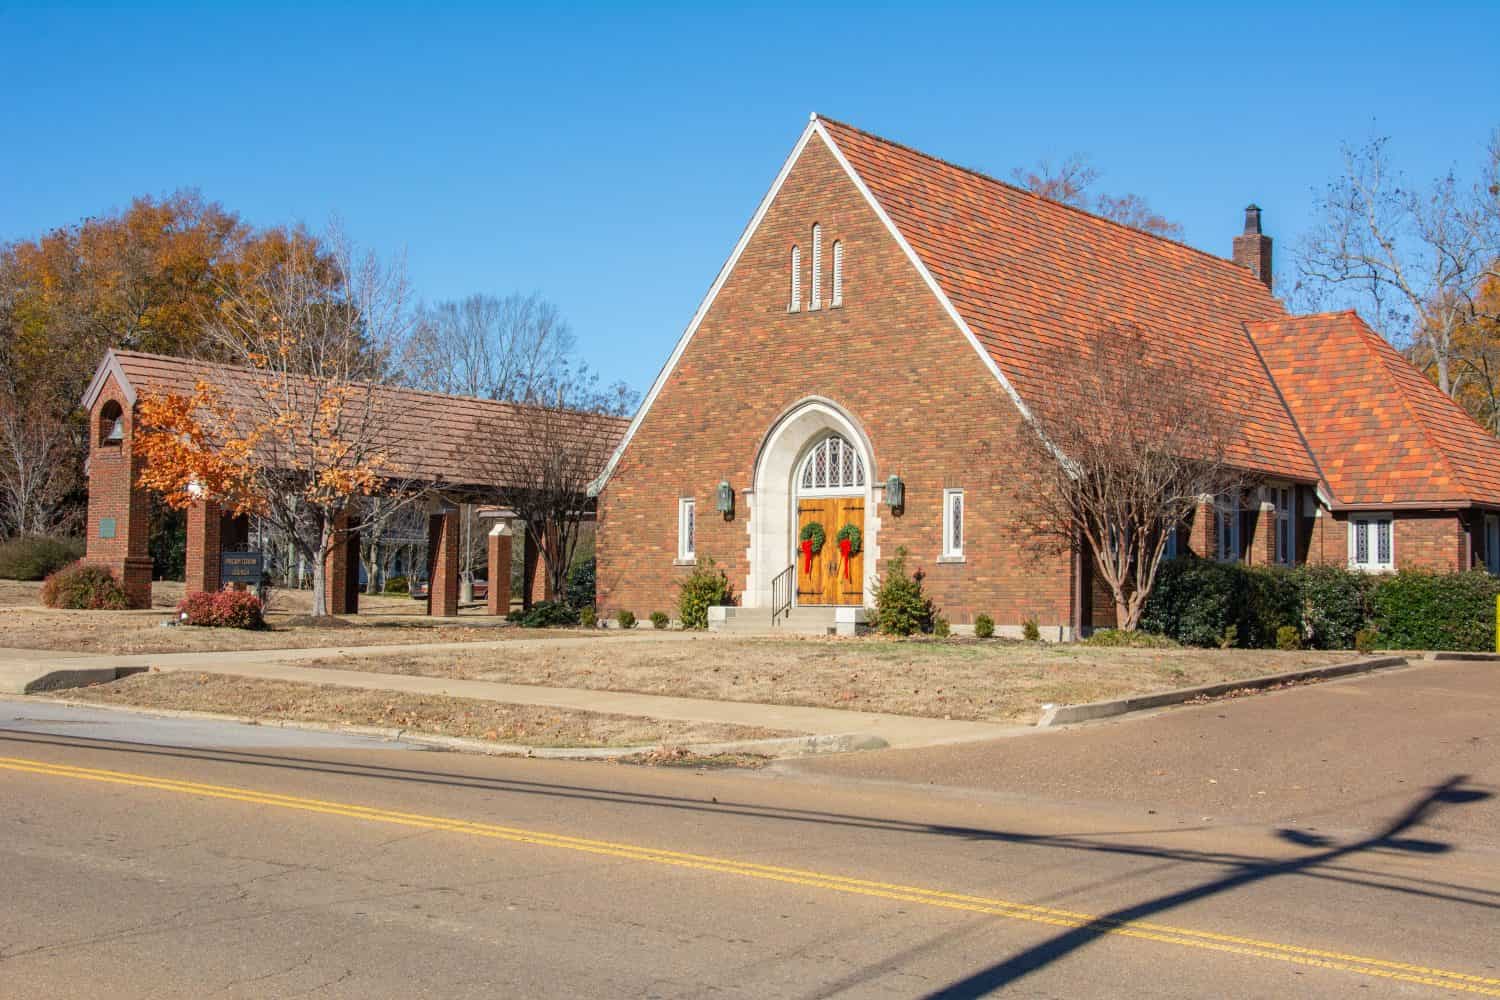 19th century Presbyterian Church, housed in the unique Tudor structure on Main Street in Senatobia, Tate County, Mississippi, USA